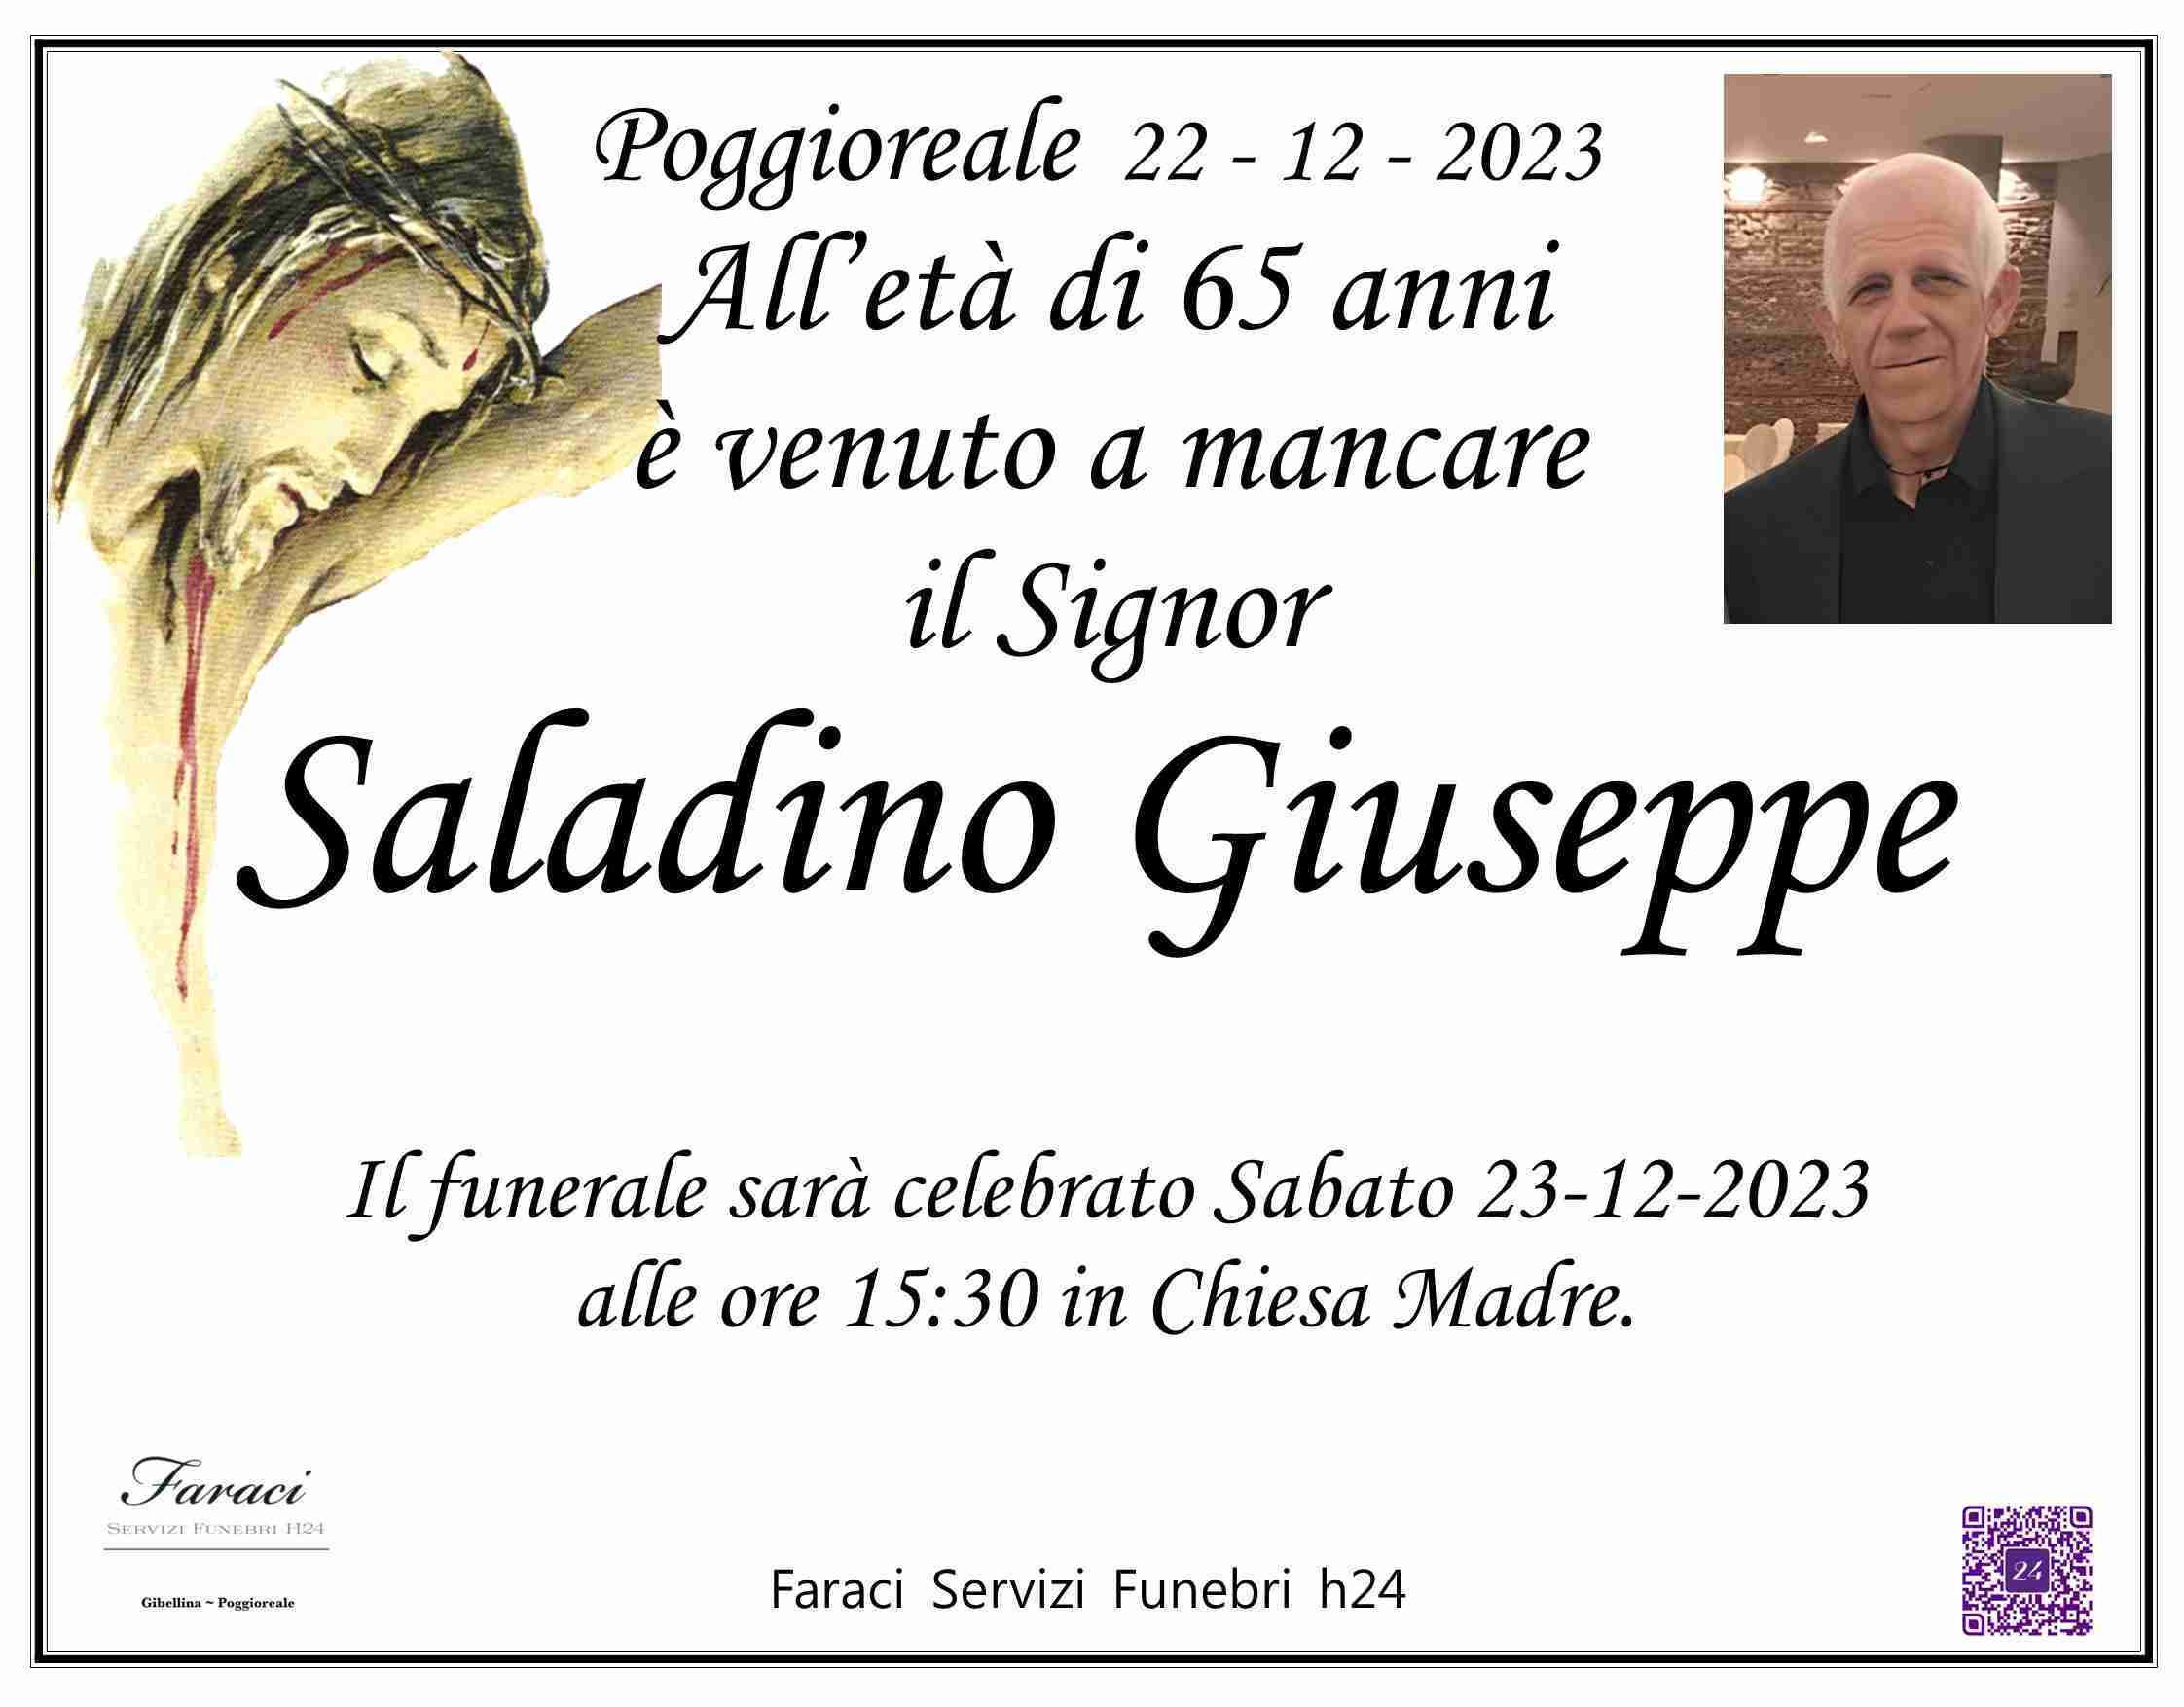 Giuseppe Saladino